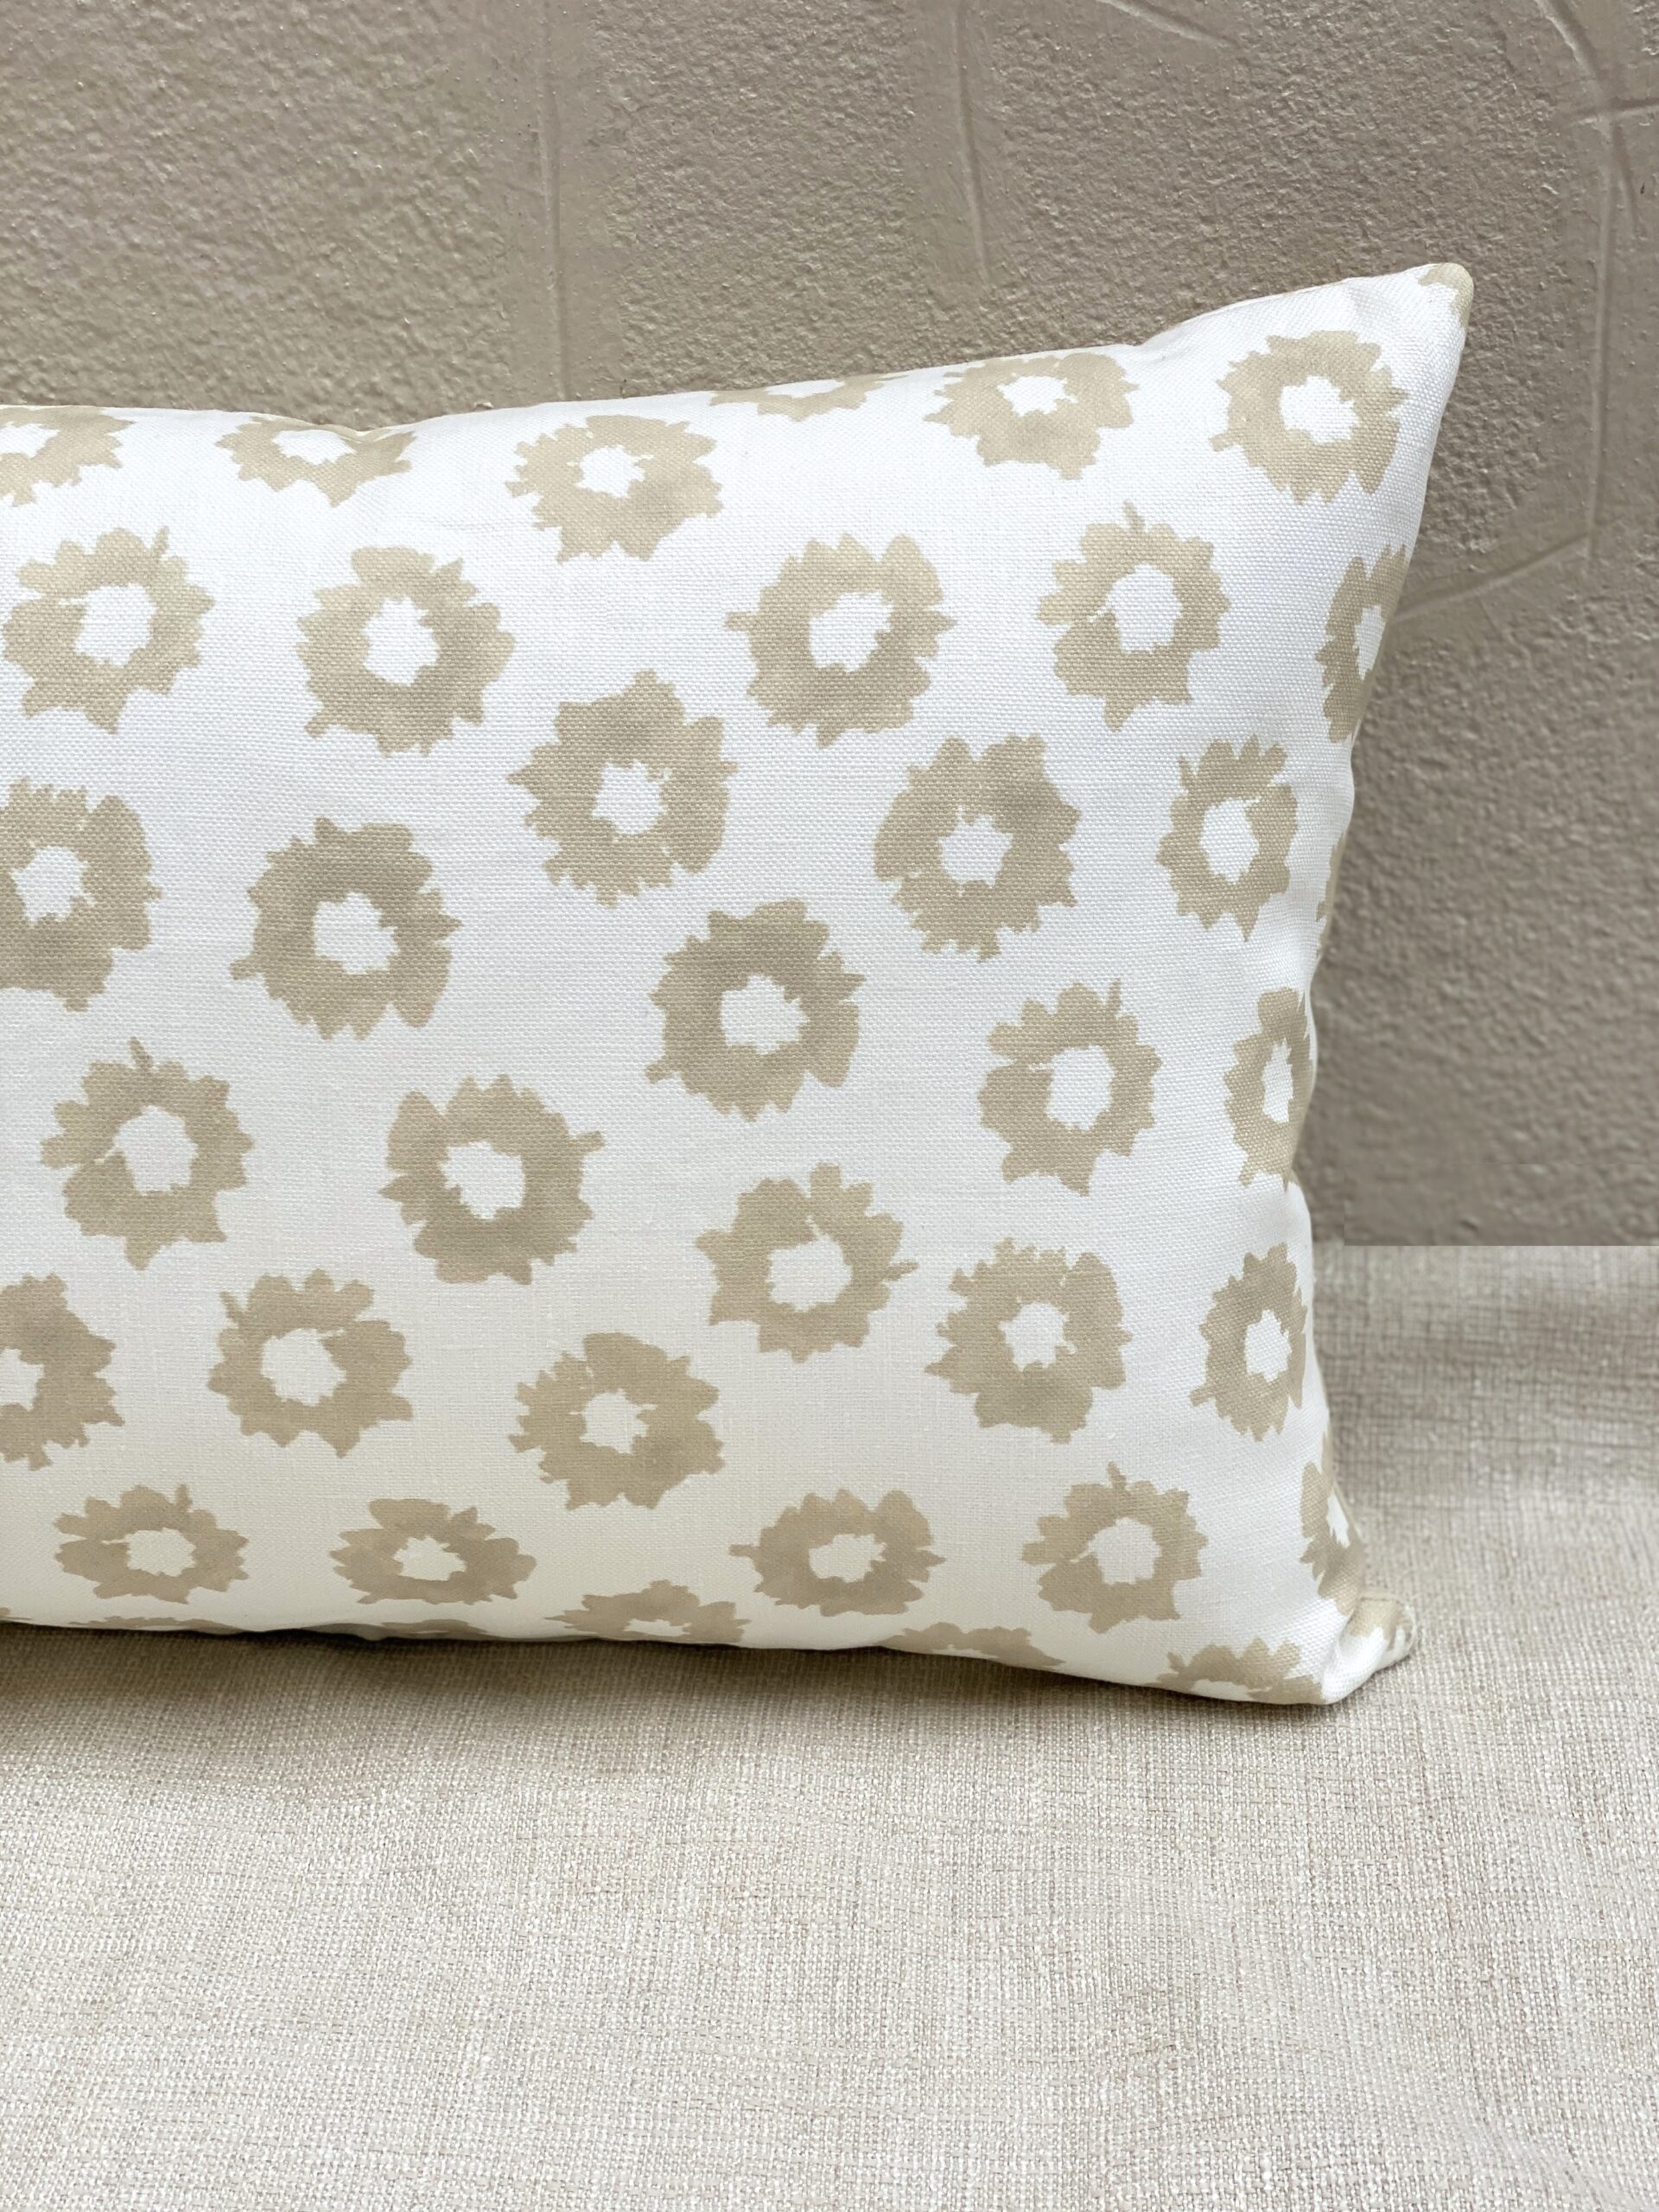 Erika M. Powell Textiles Cypress Knot Pillows